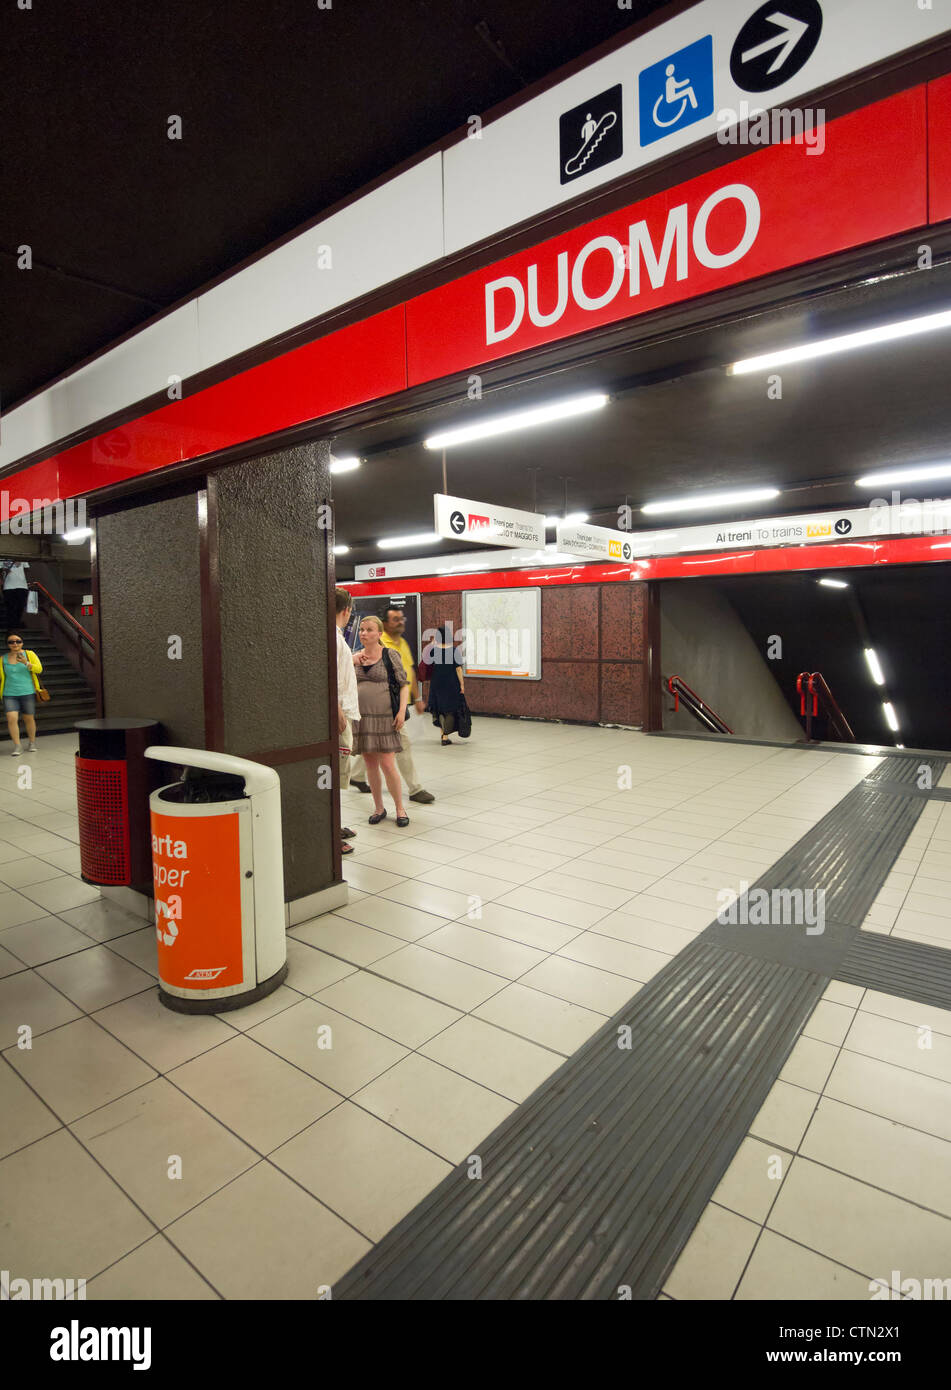 Metro milan duomo hi-res stock photography and images - Alamy